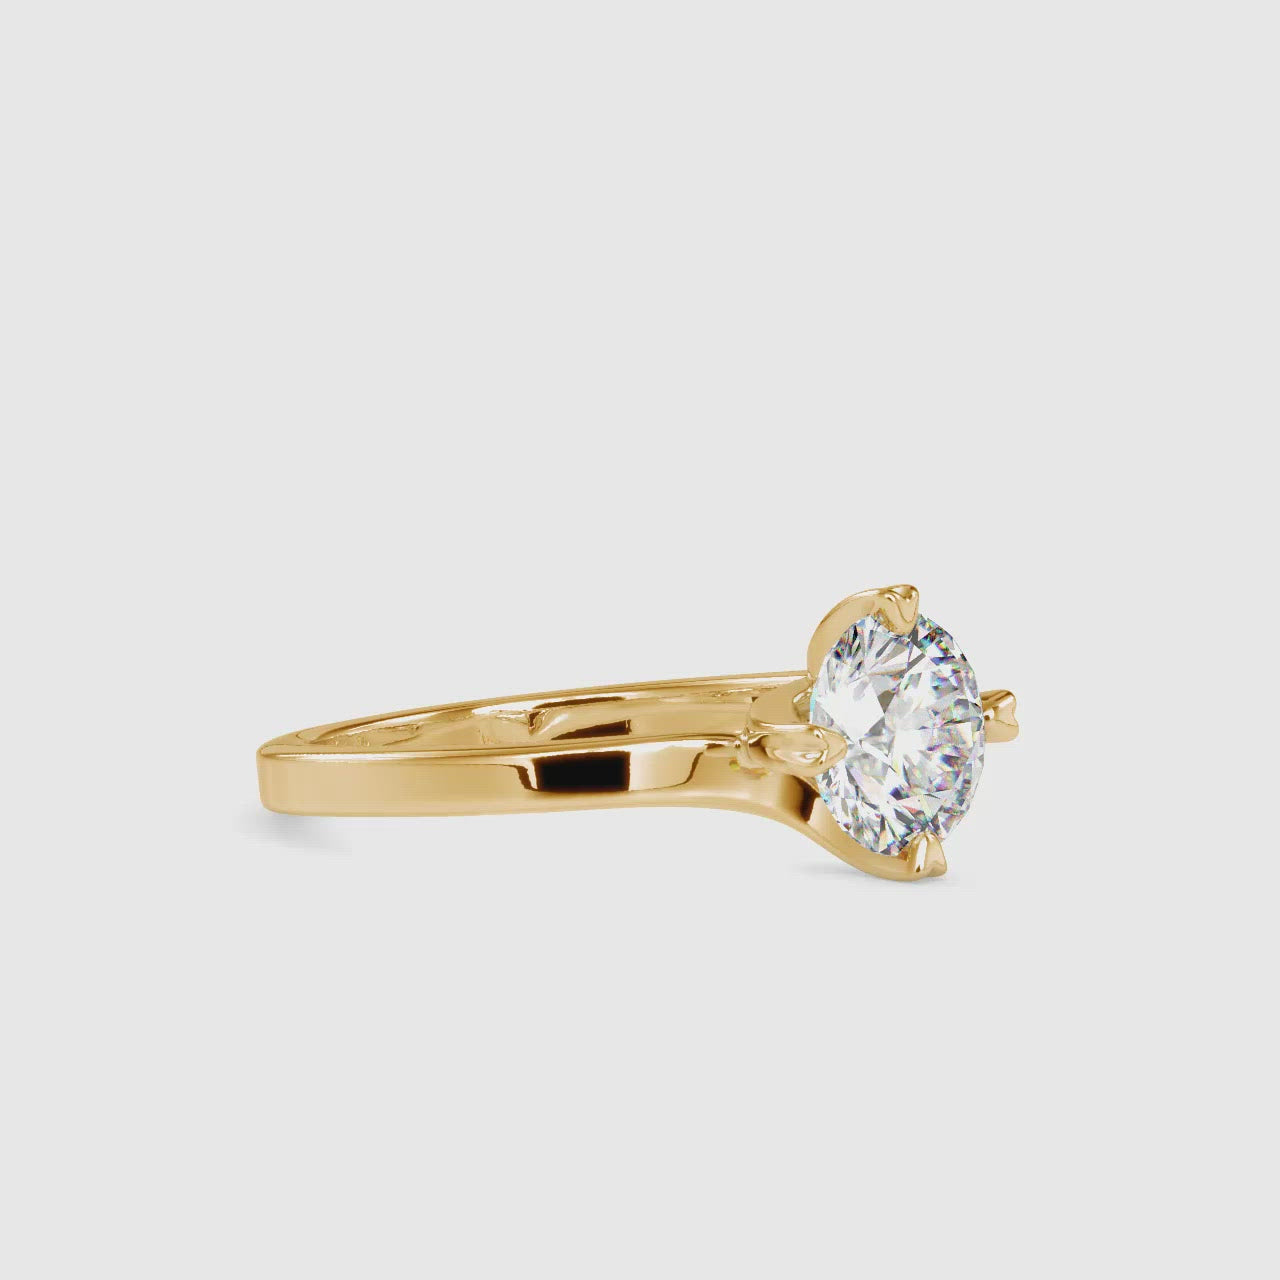 Authentic 750YG Diamond Ring #260-006-223-4887 | eBay